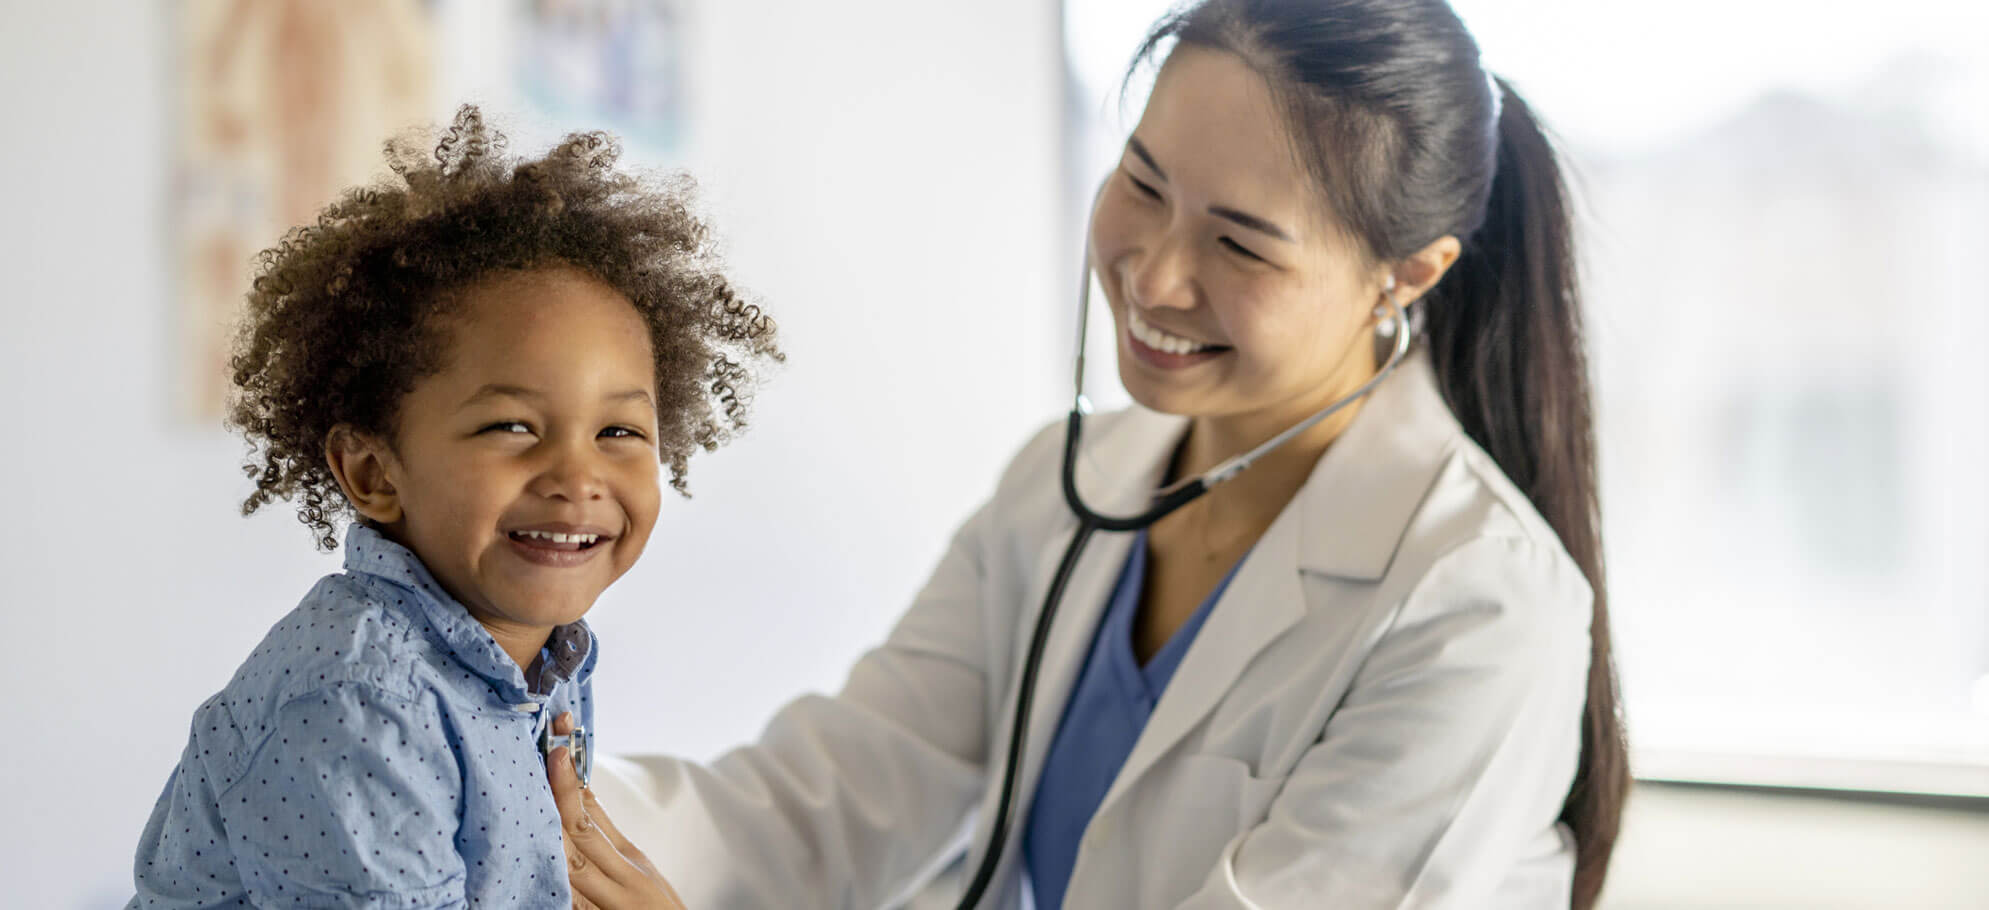 pediatric dermatologist smiling next to little girl